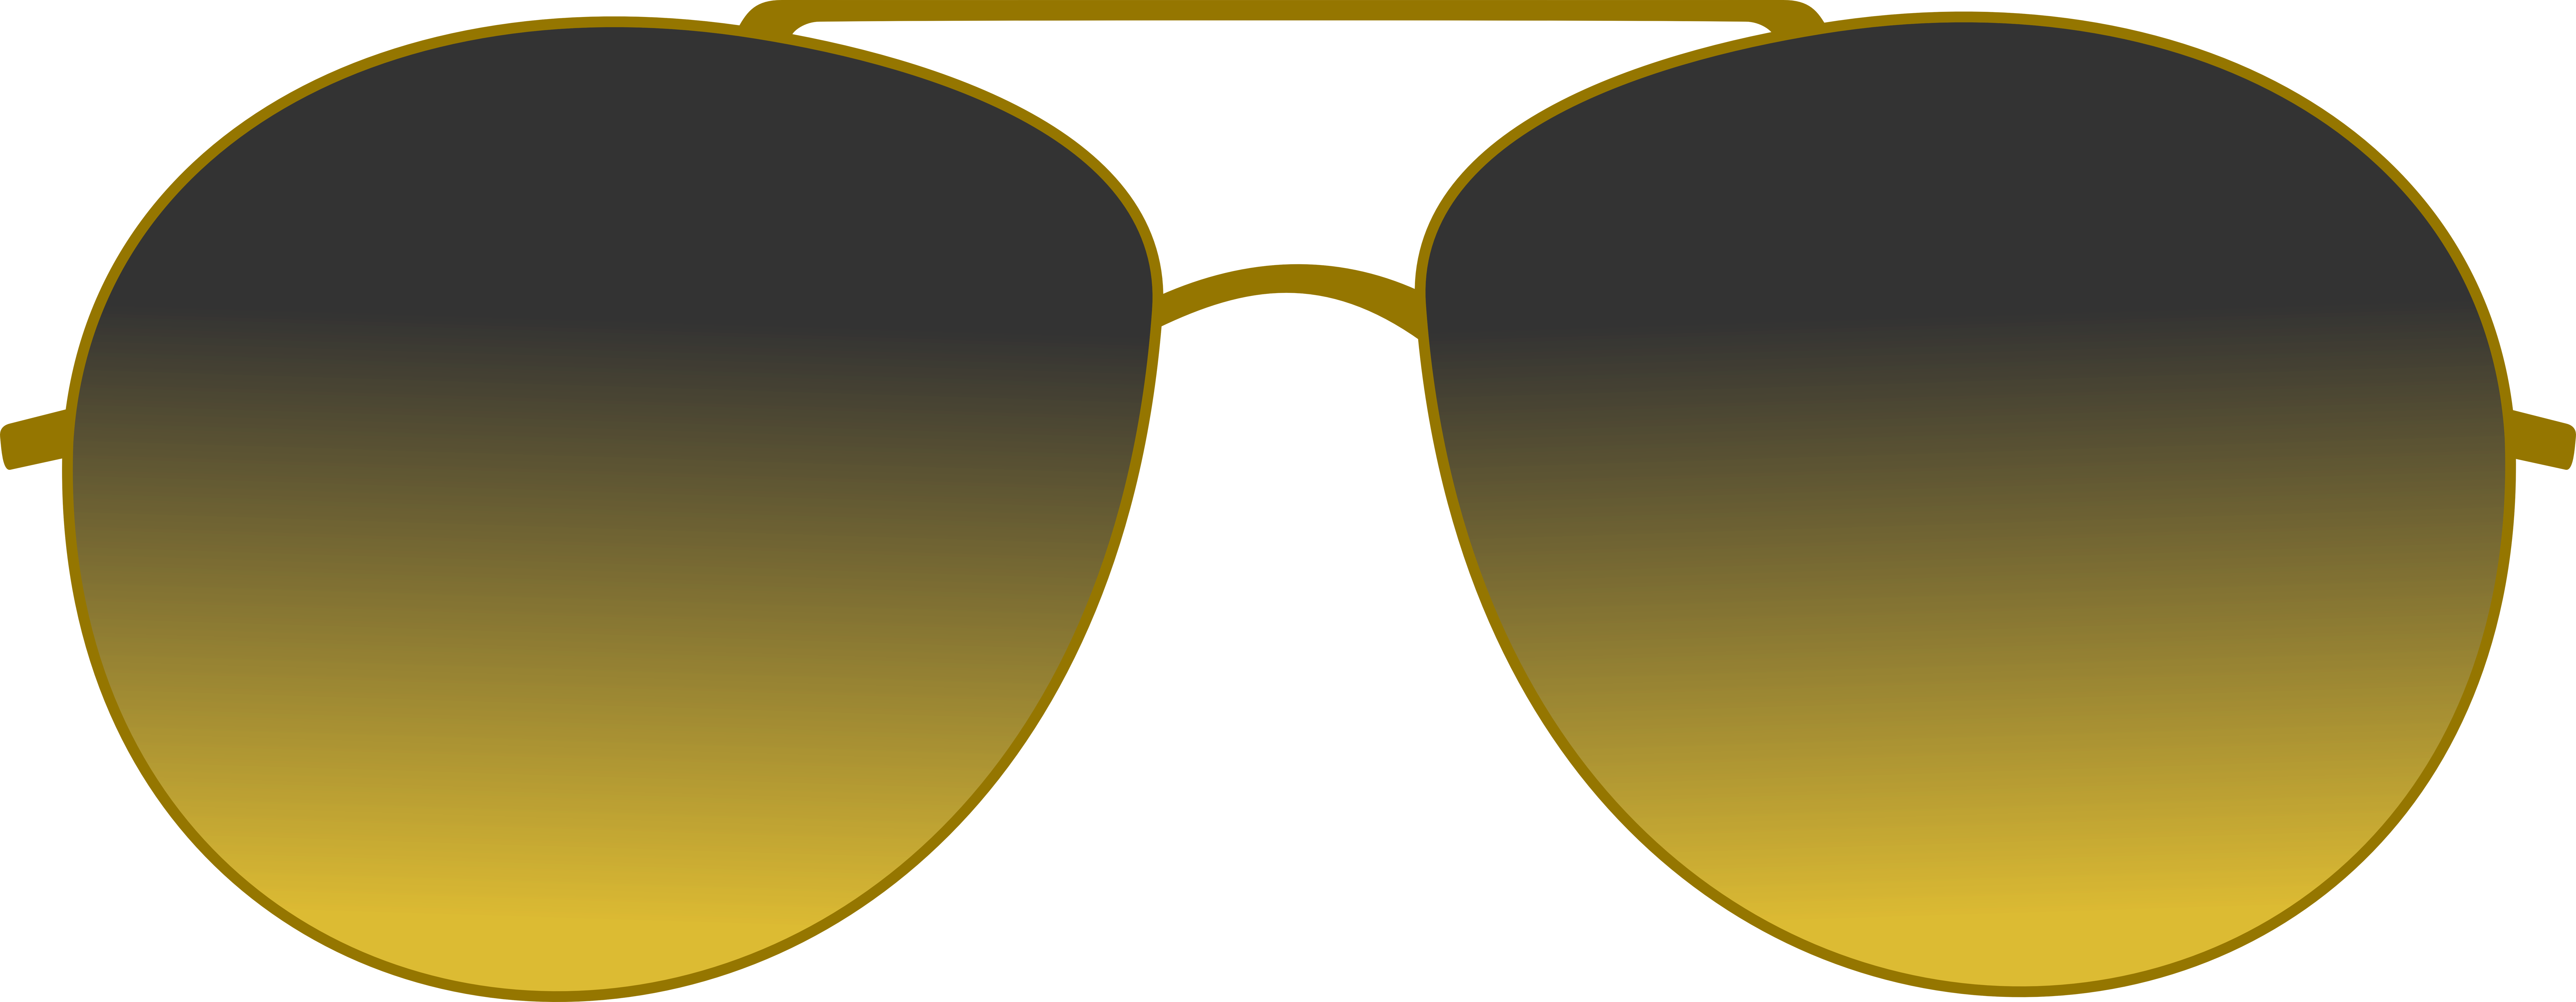 aviator sunglasses png - Clip Art Library